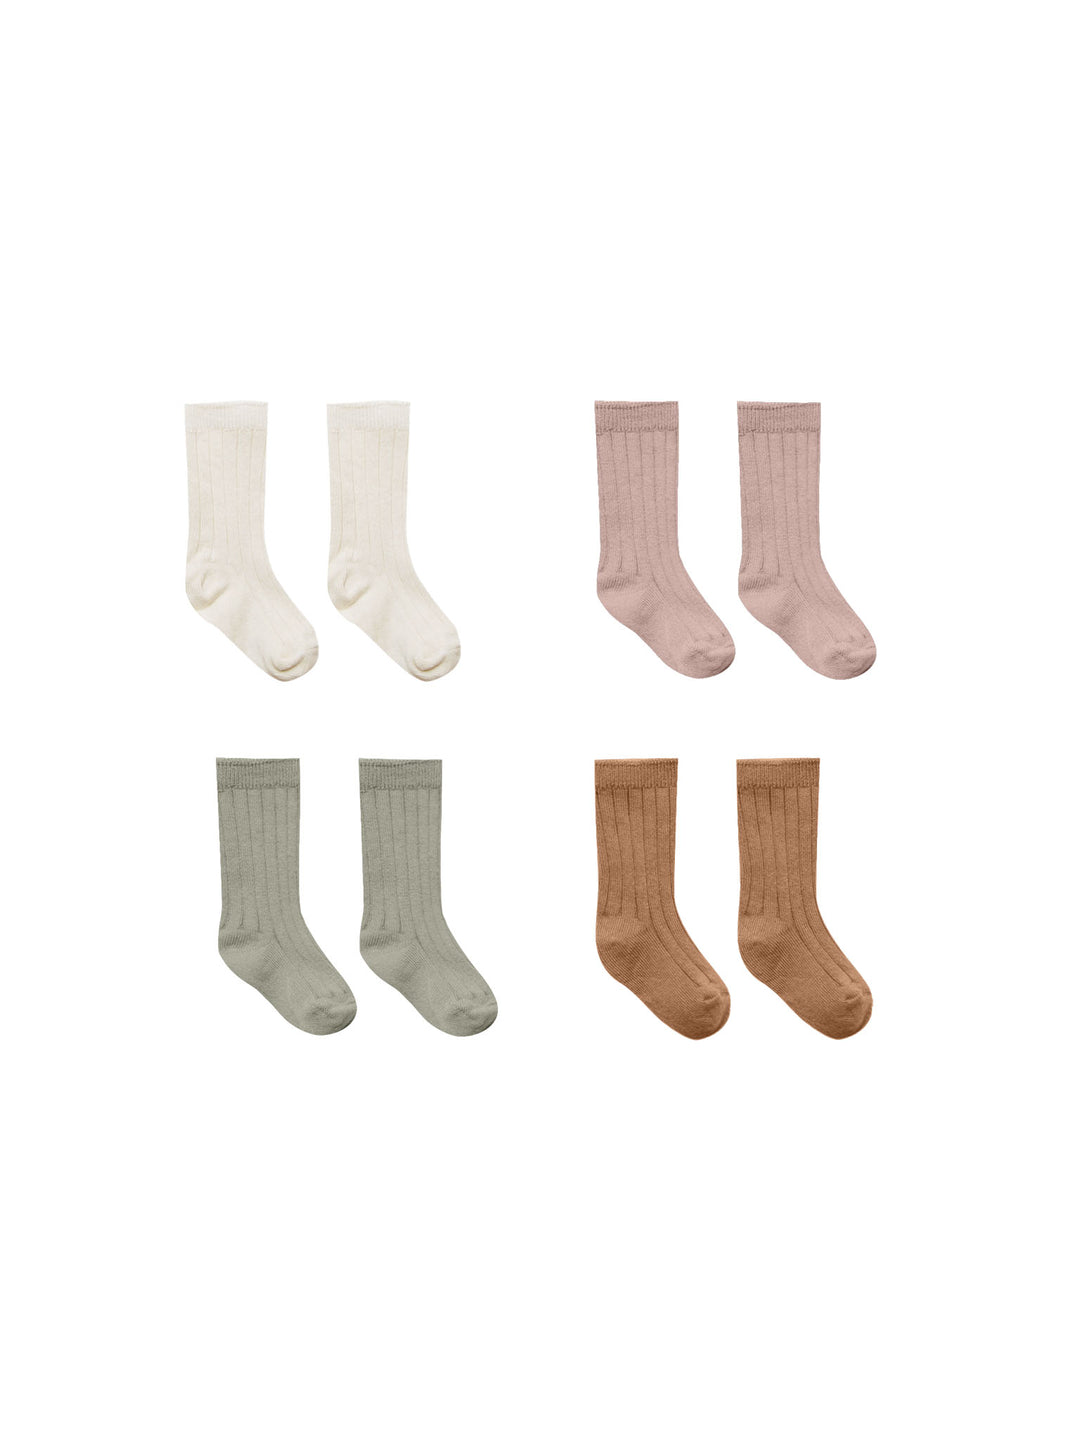 Quincy Mae Socks - Set of 4 (Natural, Mauve, Basil, Cinnamon)